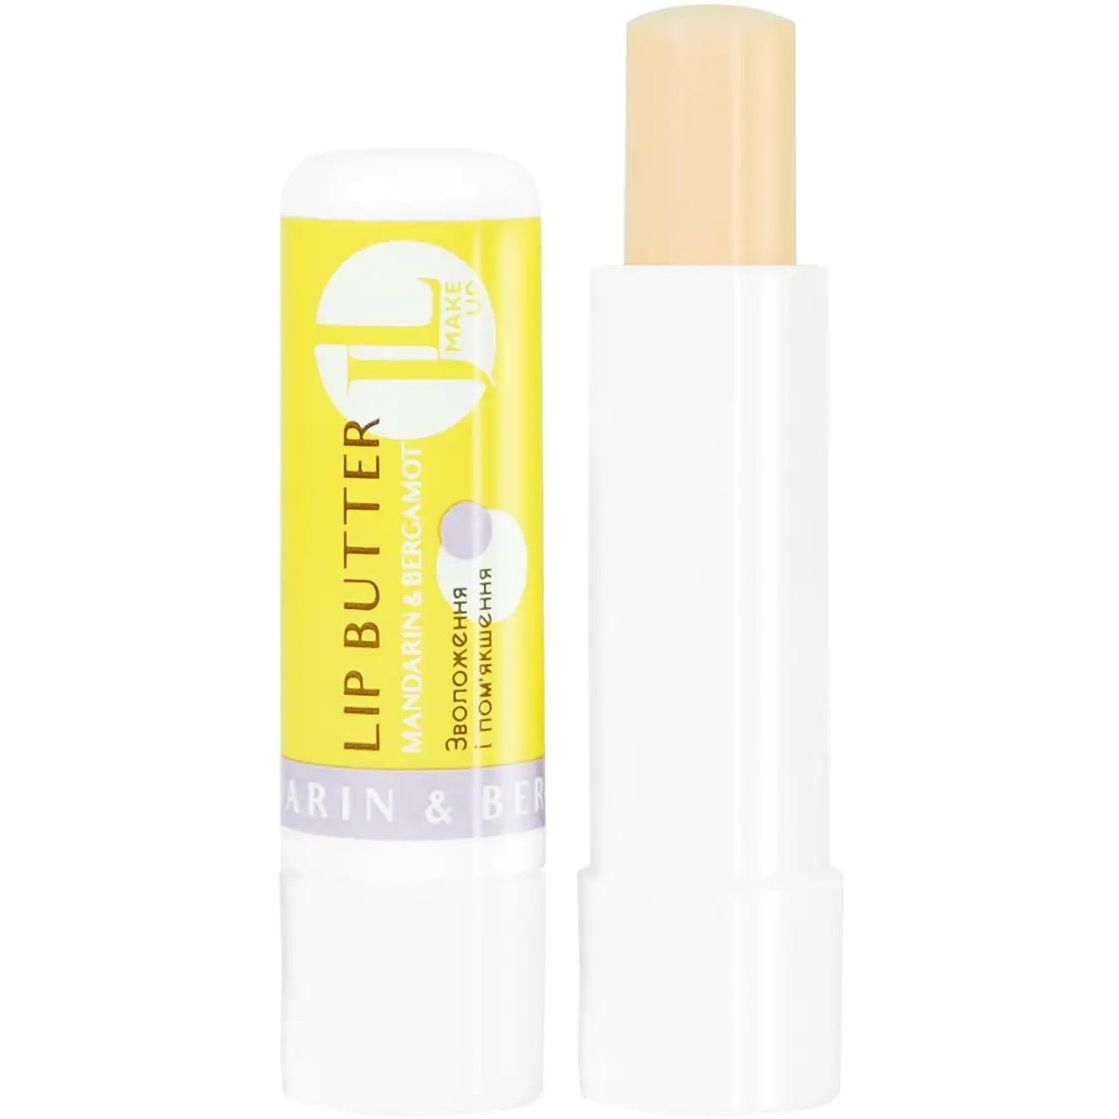 Бальзам-масло для губ Jovial Luxe Lip Butter відтінок 02 (Мандарин та бергамот) 4.5 г - фото 1